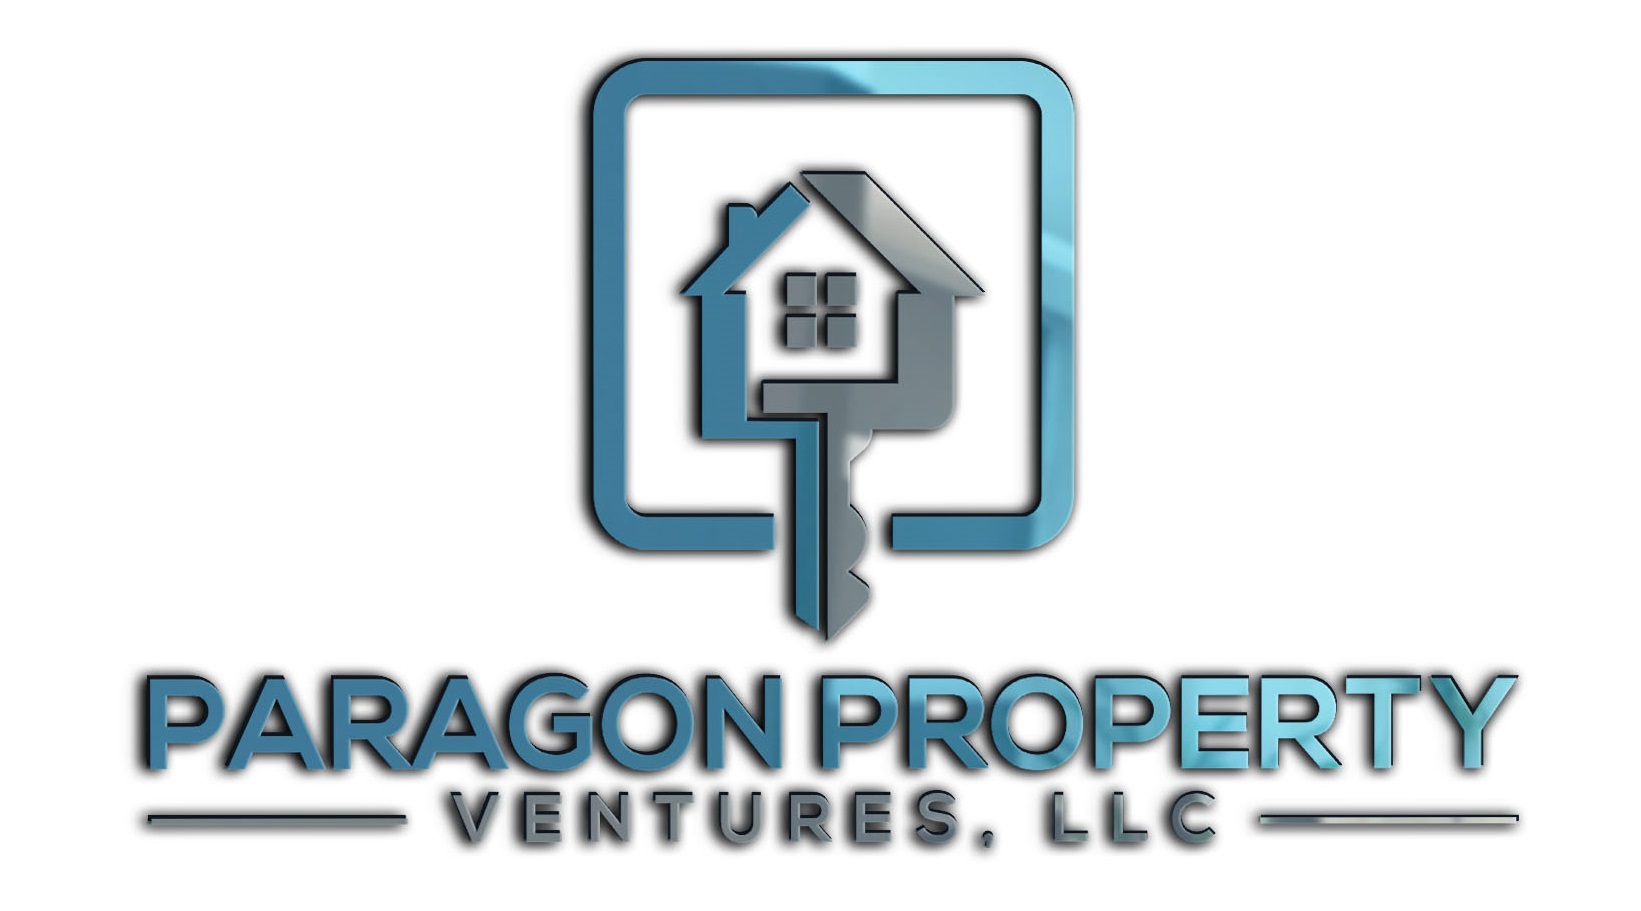 Paragon Property Ventures